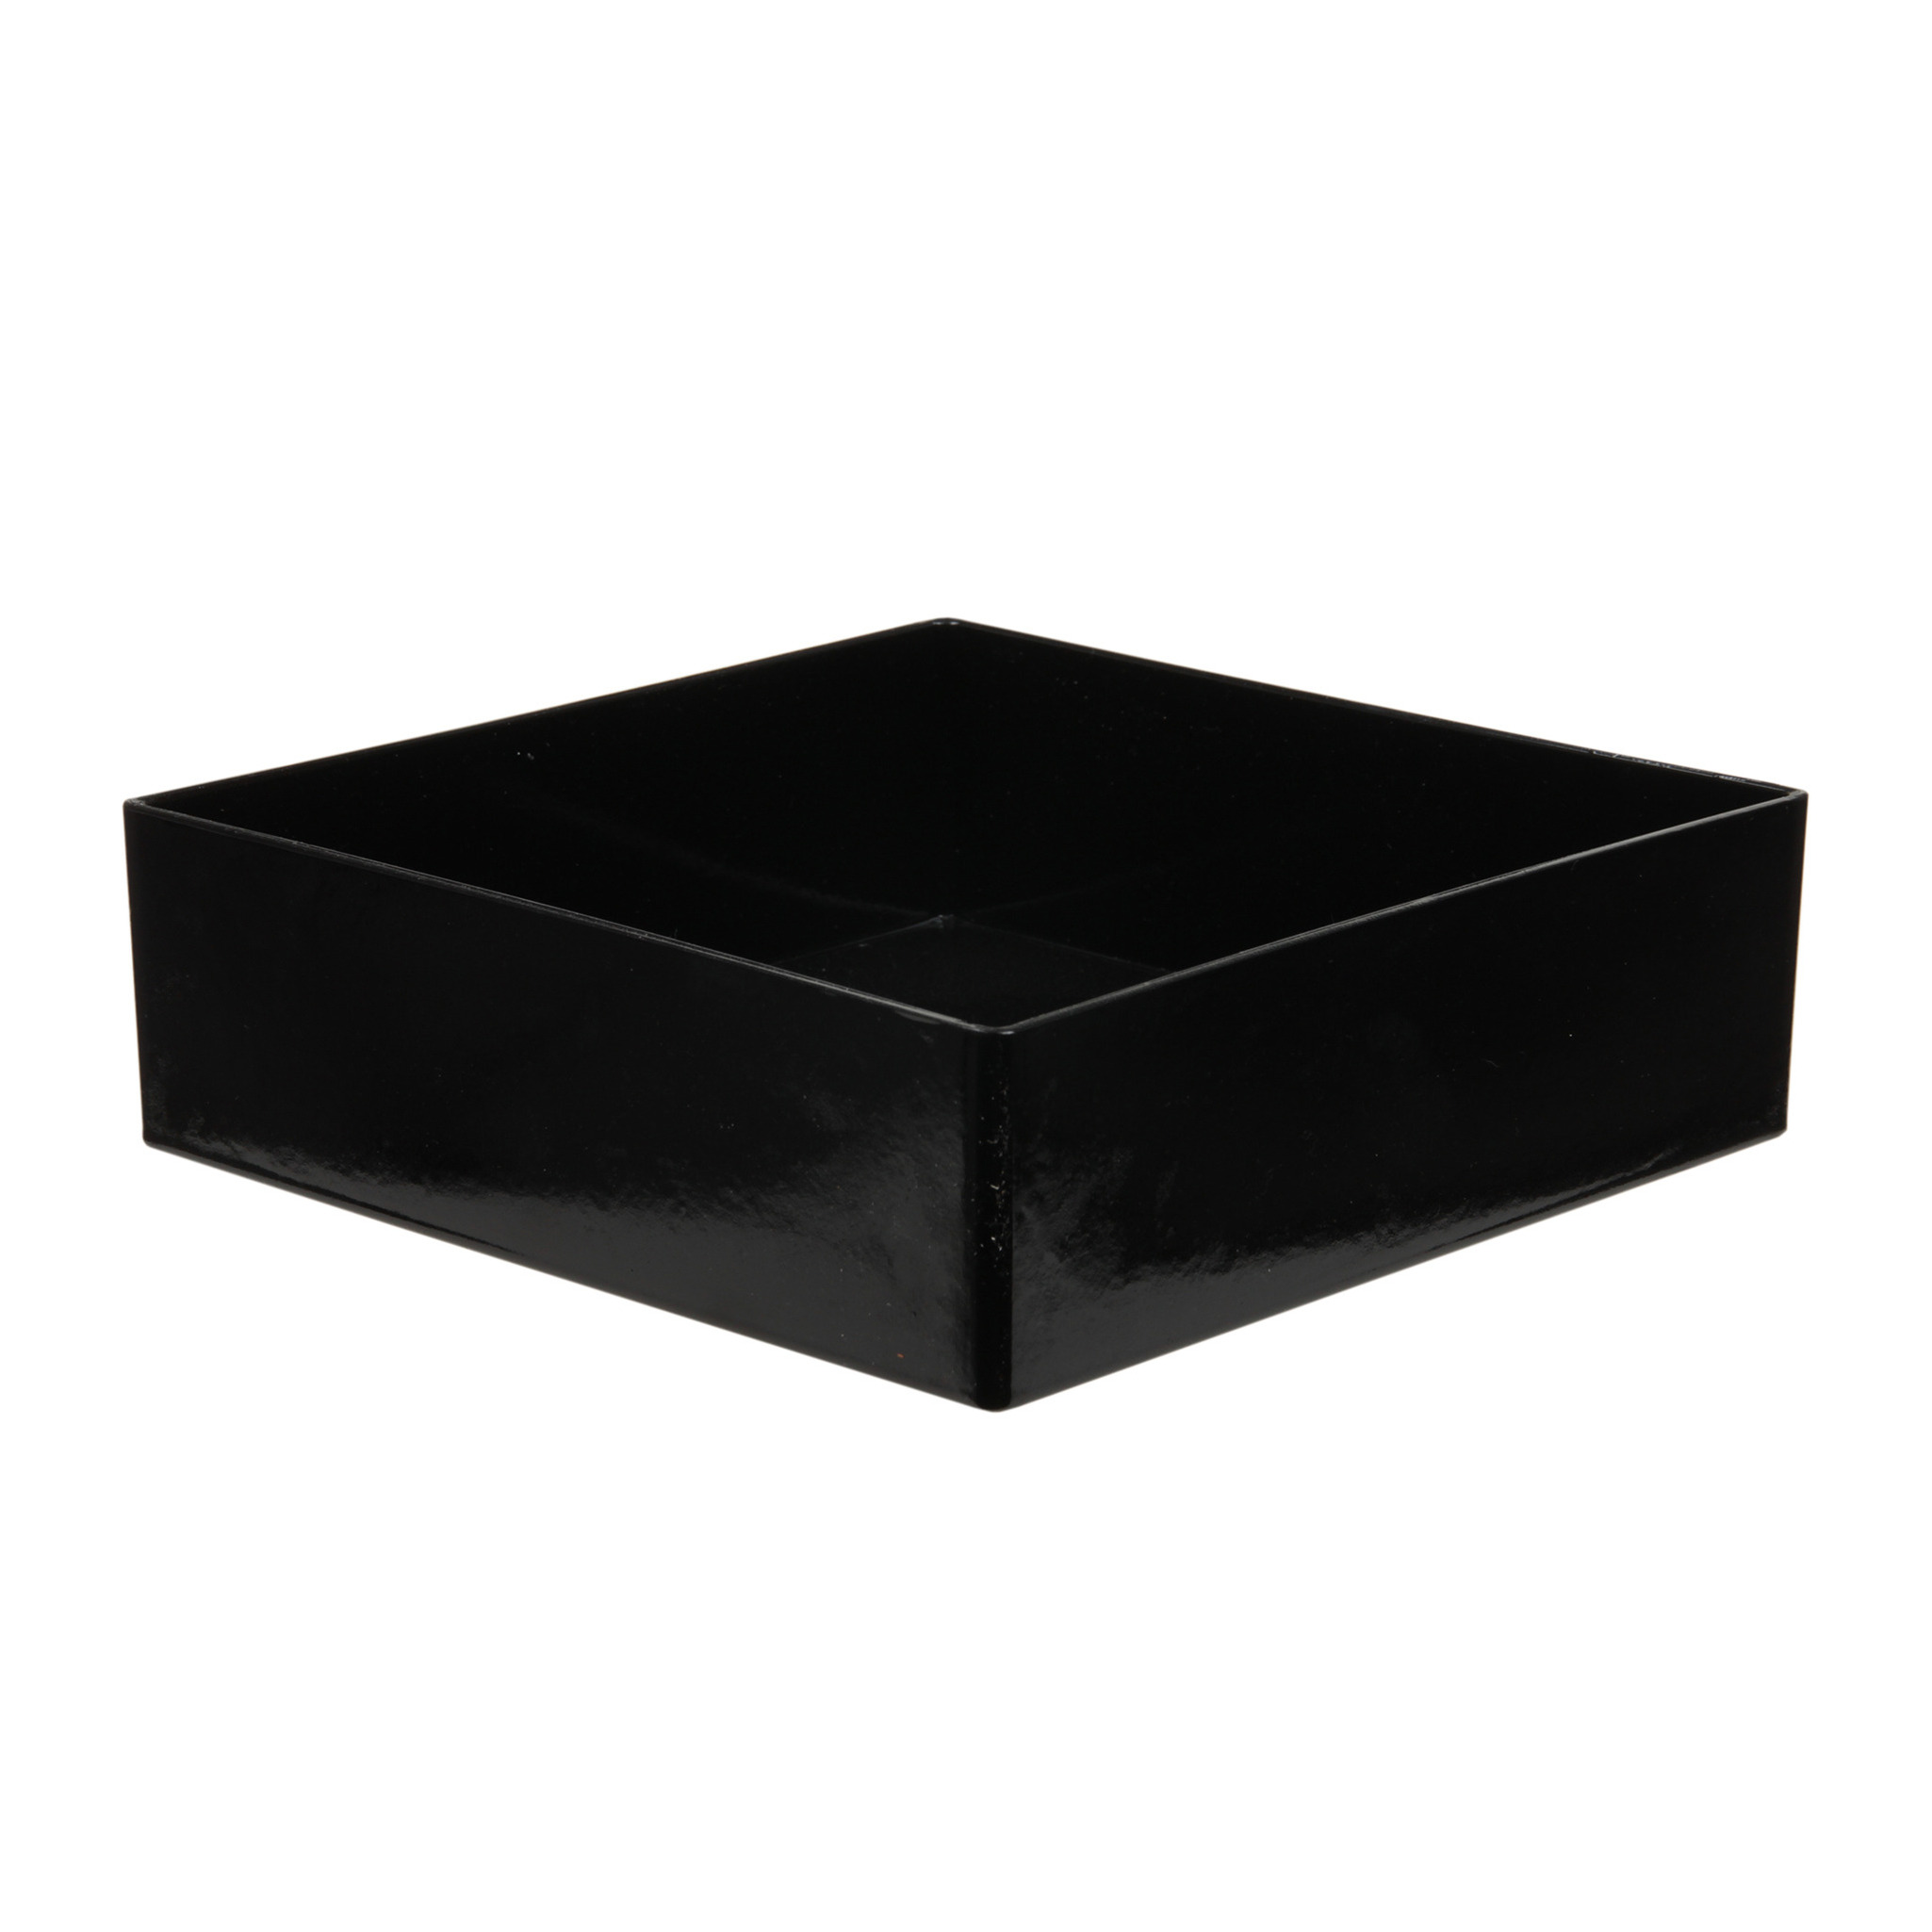 Tafel dienblad-plateau-tray zwart 20 x 20 cm kunststof vierkant